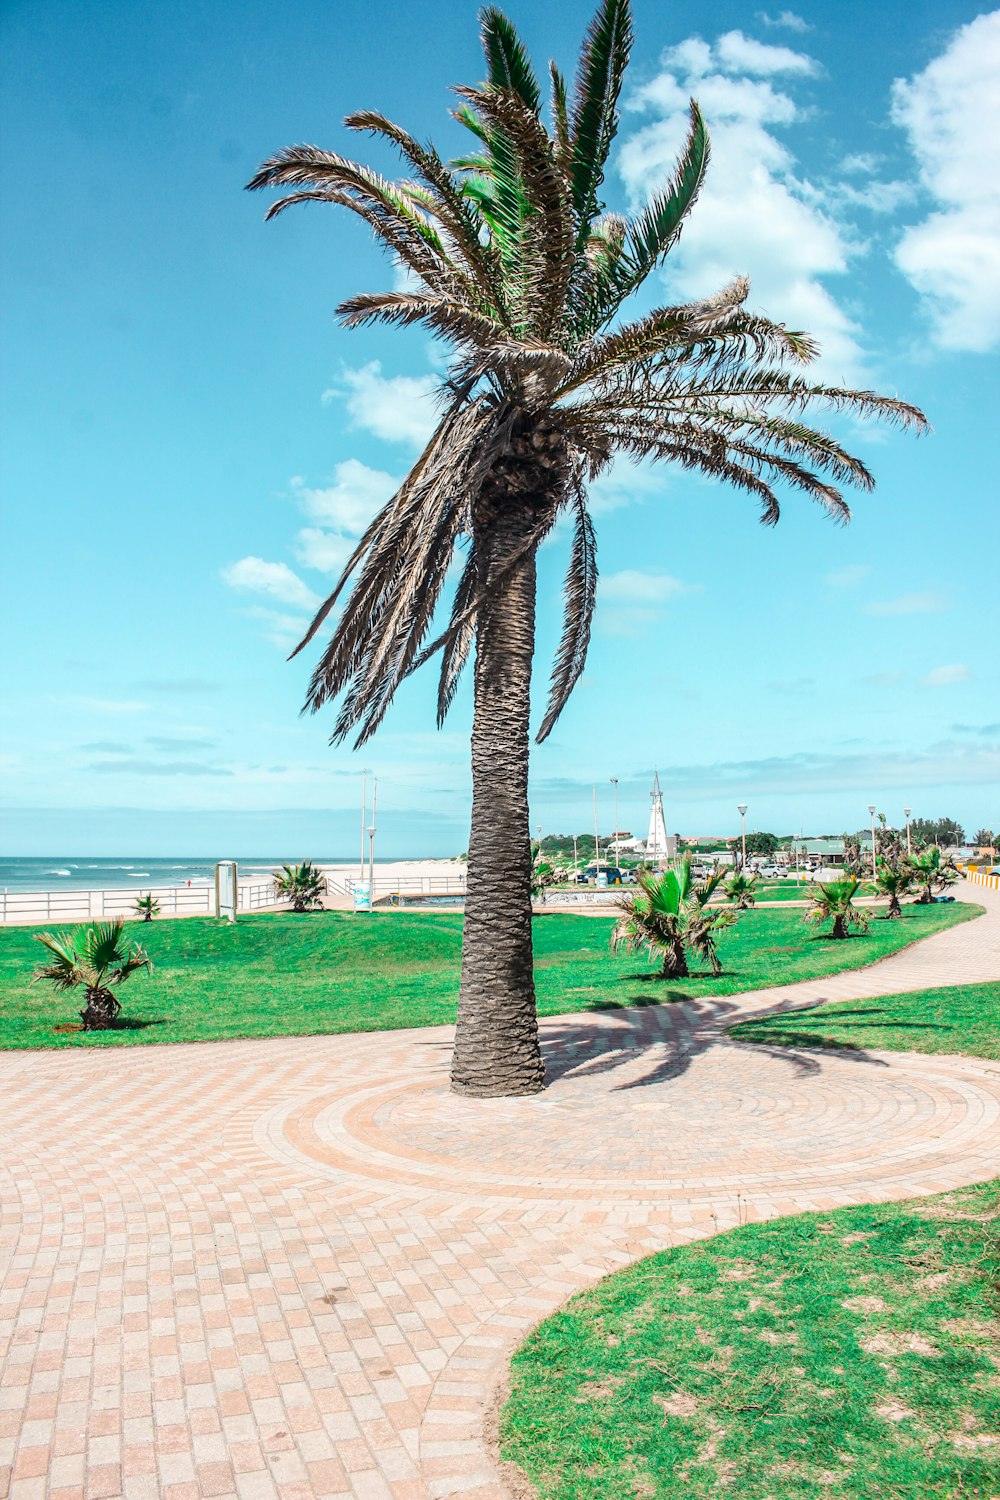 a palm tree on a brick walkway near the beach